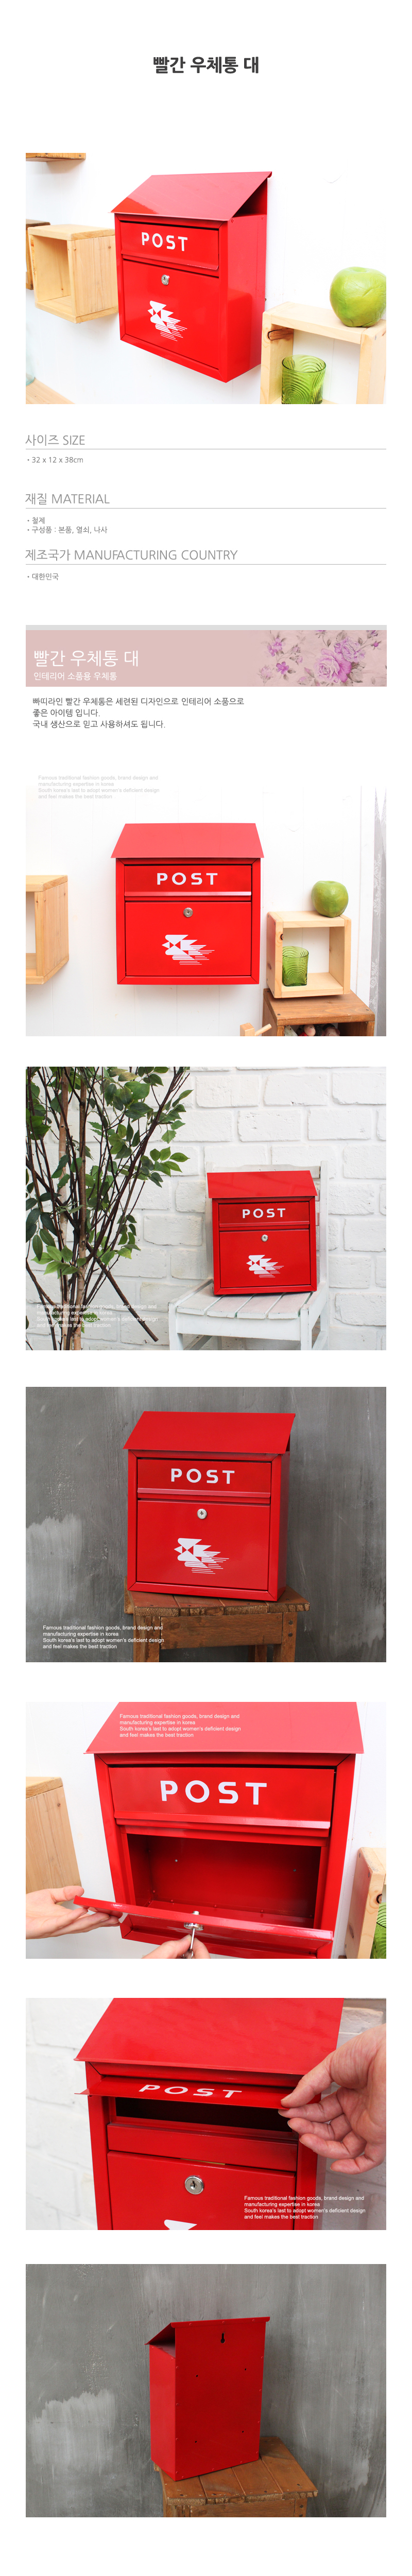 postbox_L.jpg